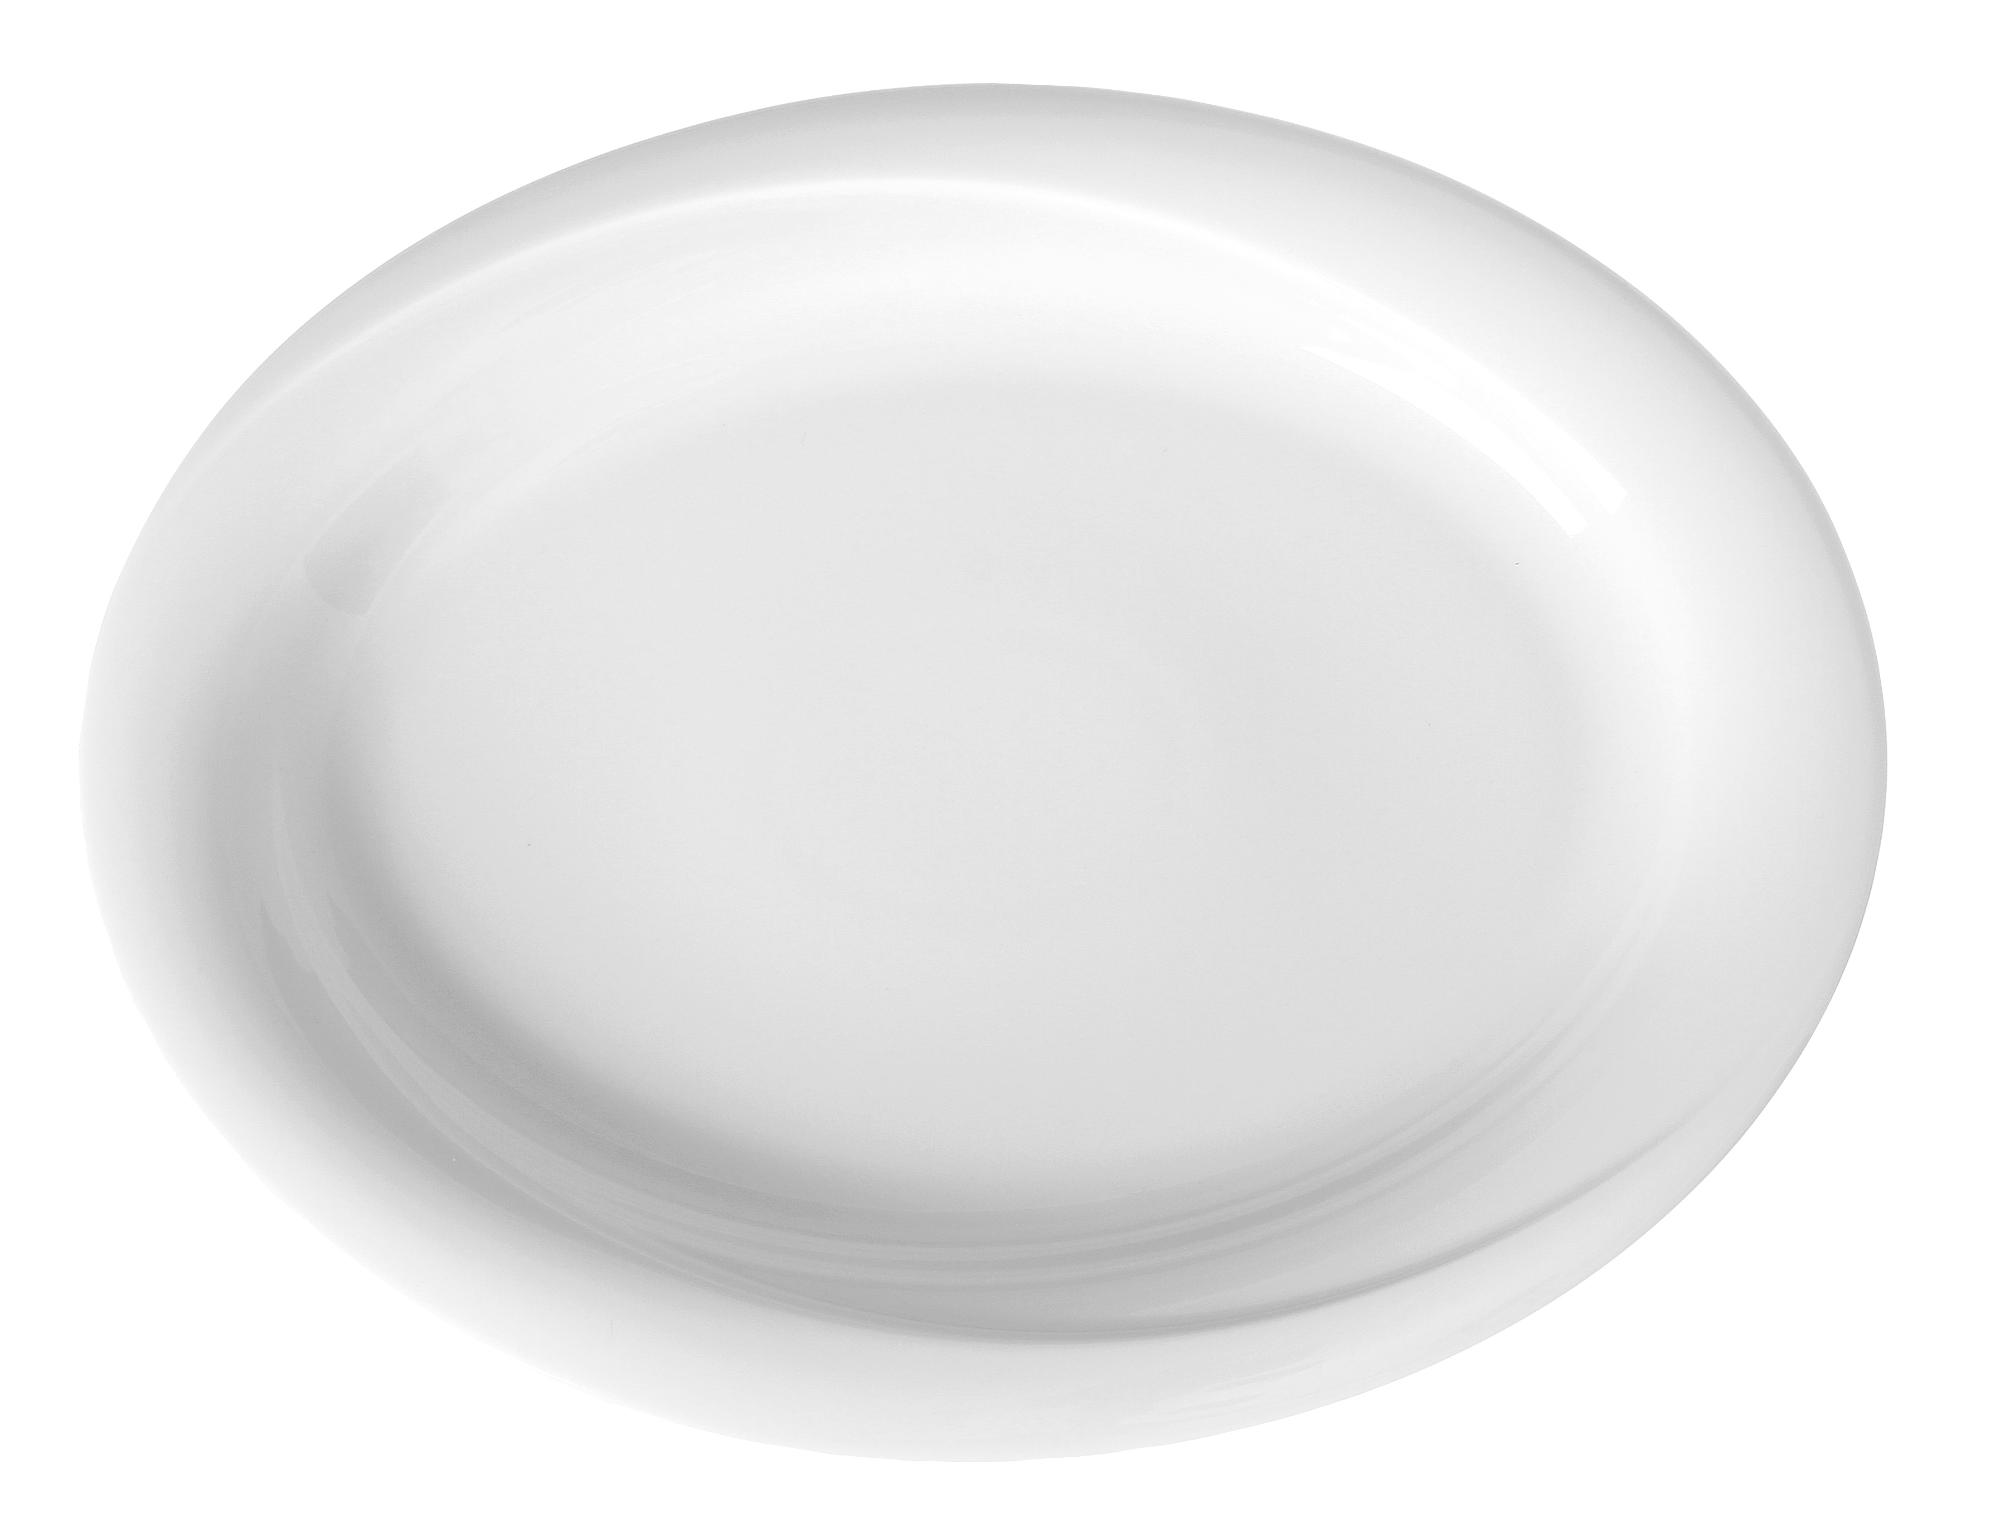 Gourmet oval dish, 340x270mm